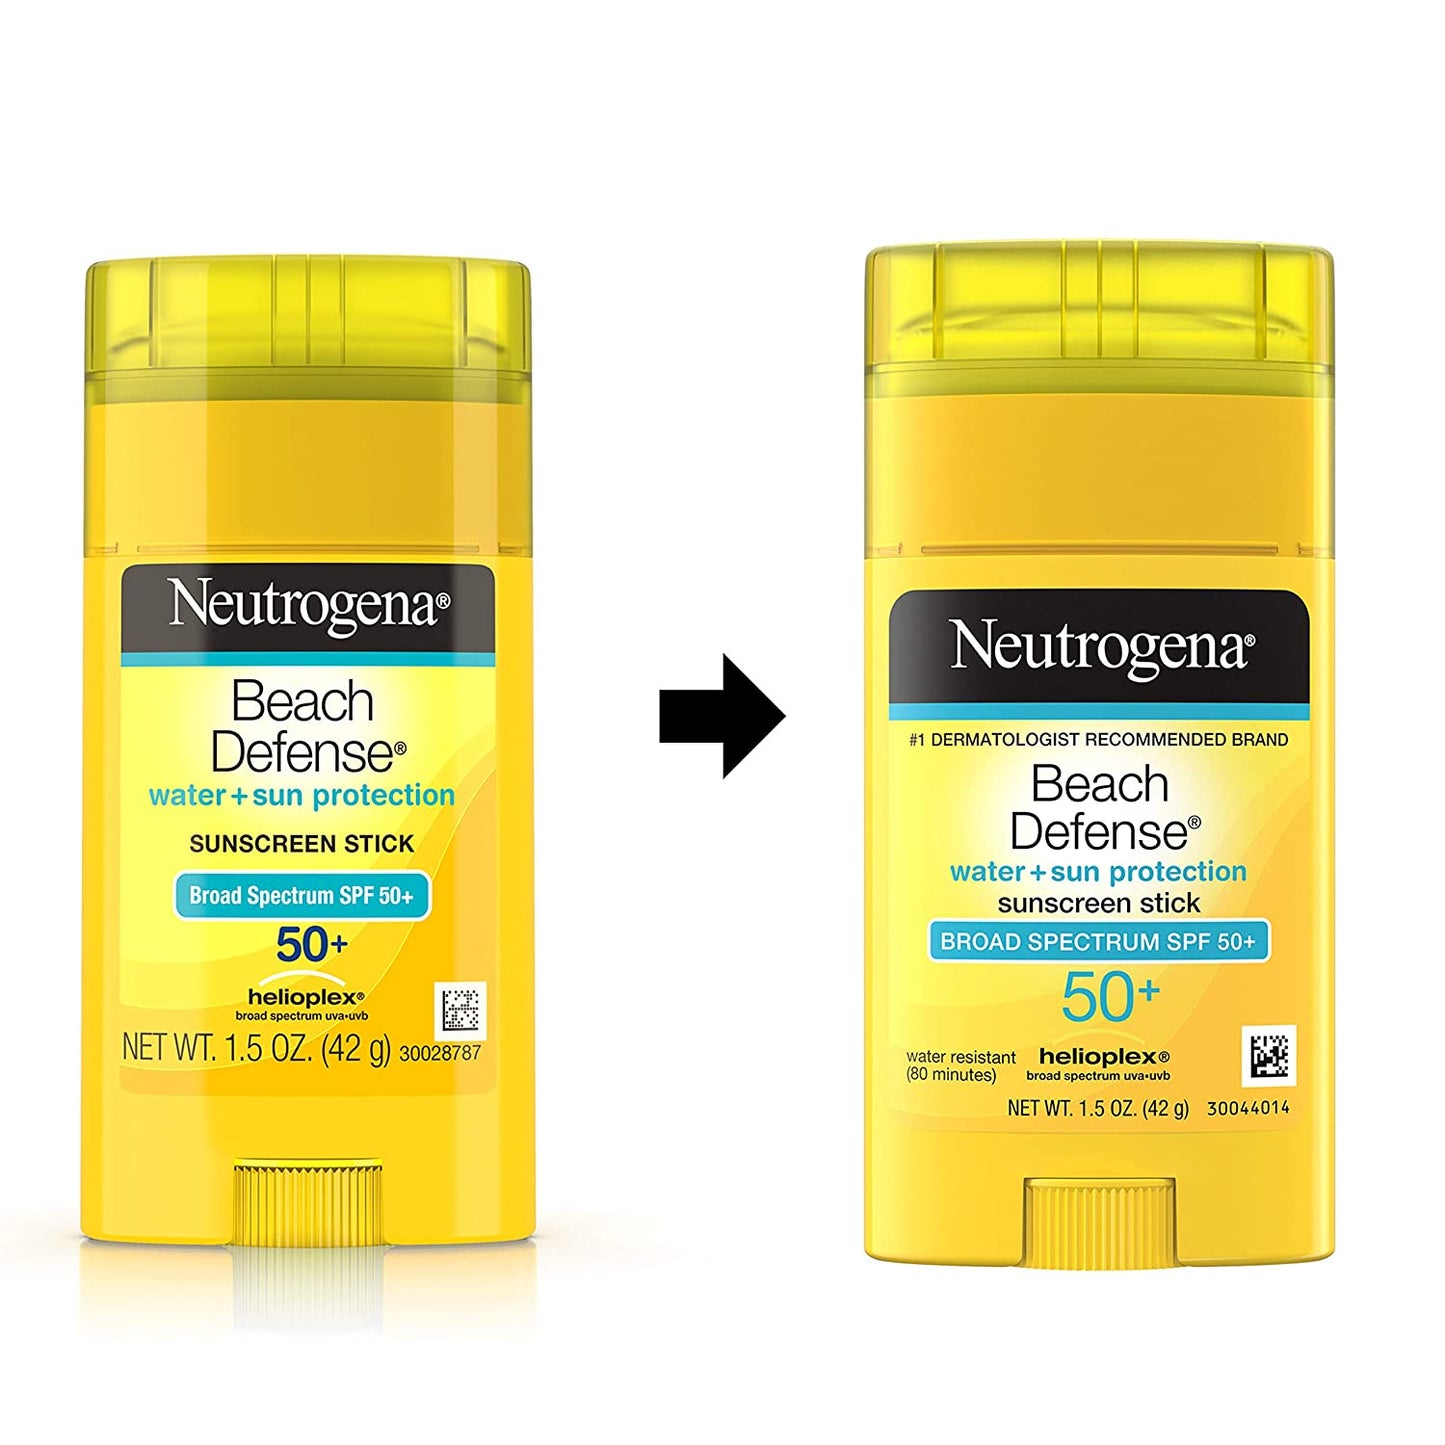 Neutrogena Beach Defense Water + Sun Protection Sunscreen Stick with Broad Spectrum SPF 50+, 1.5 oz. / 42g